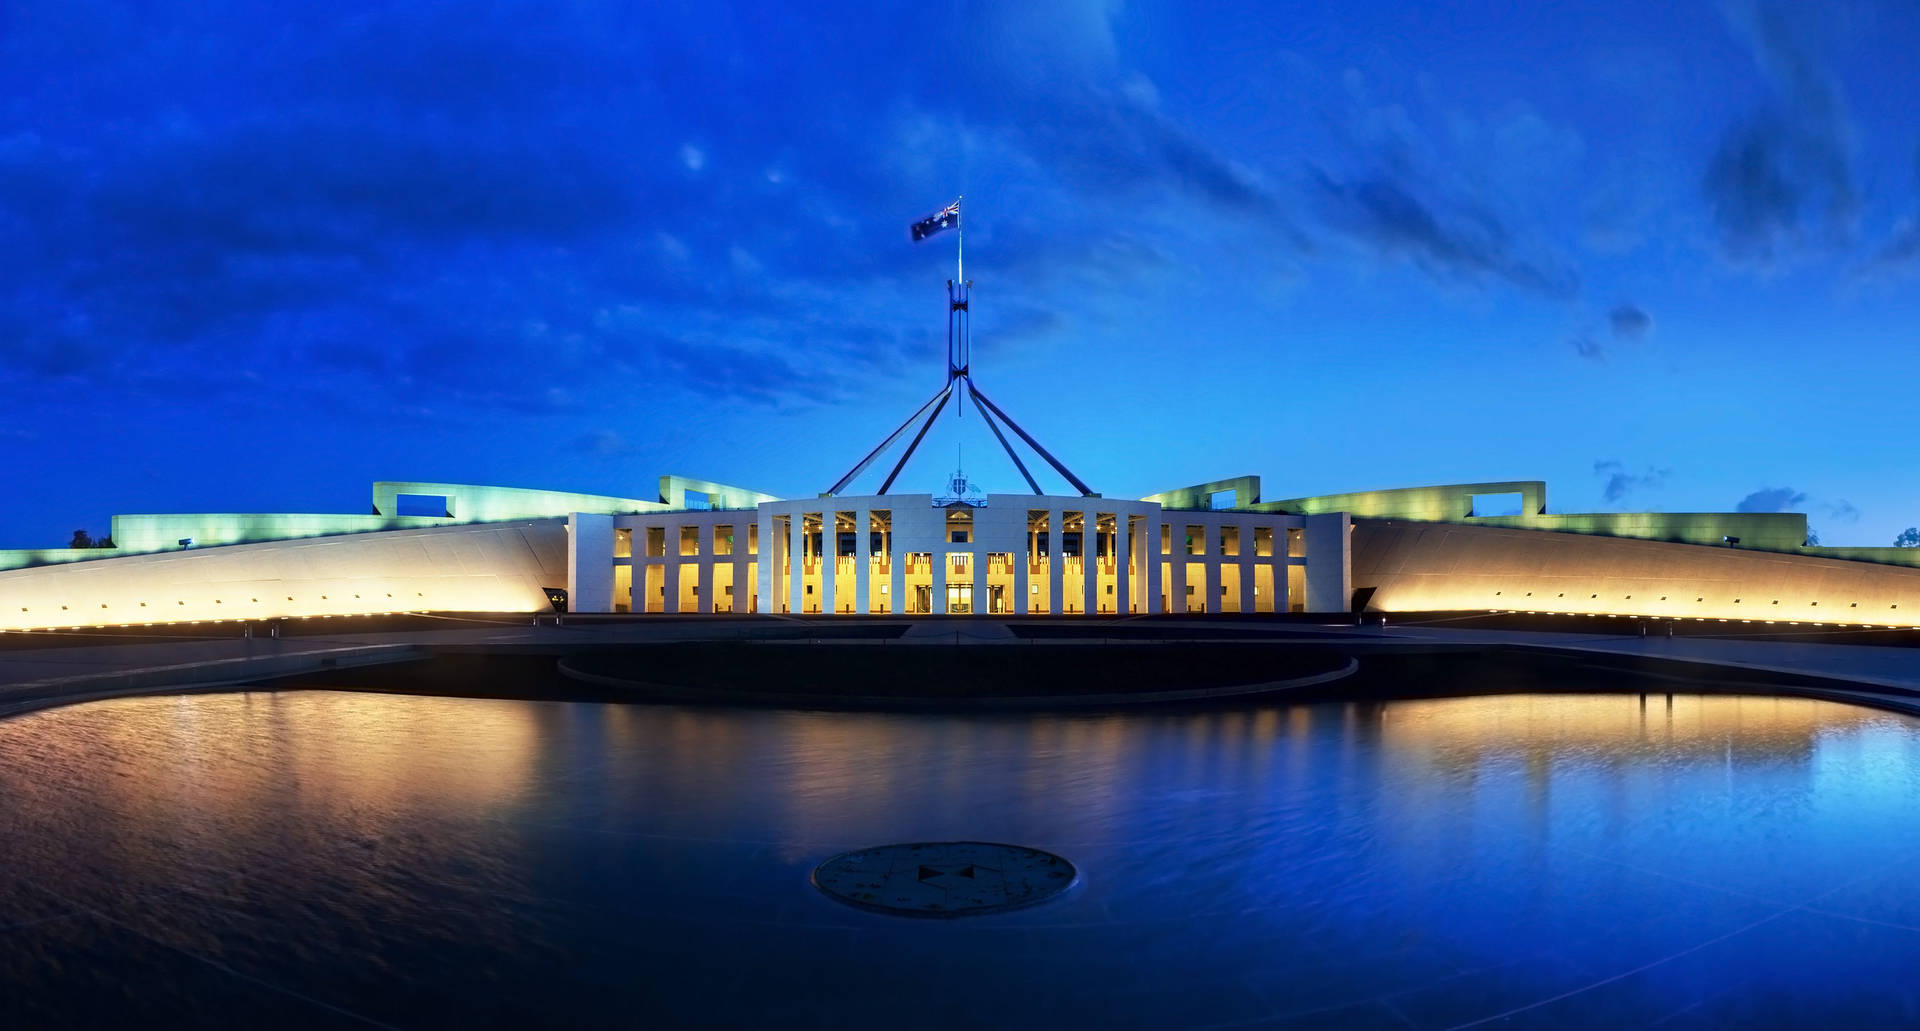 Canberraparlamentshaus Nachtphotographie Wallpaper